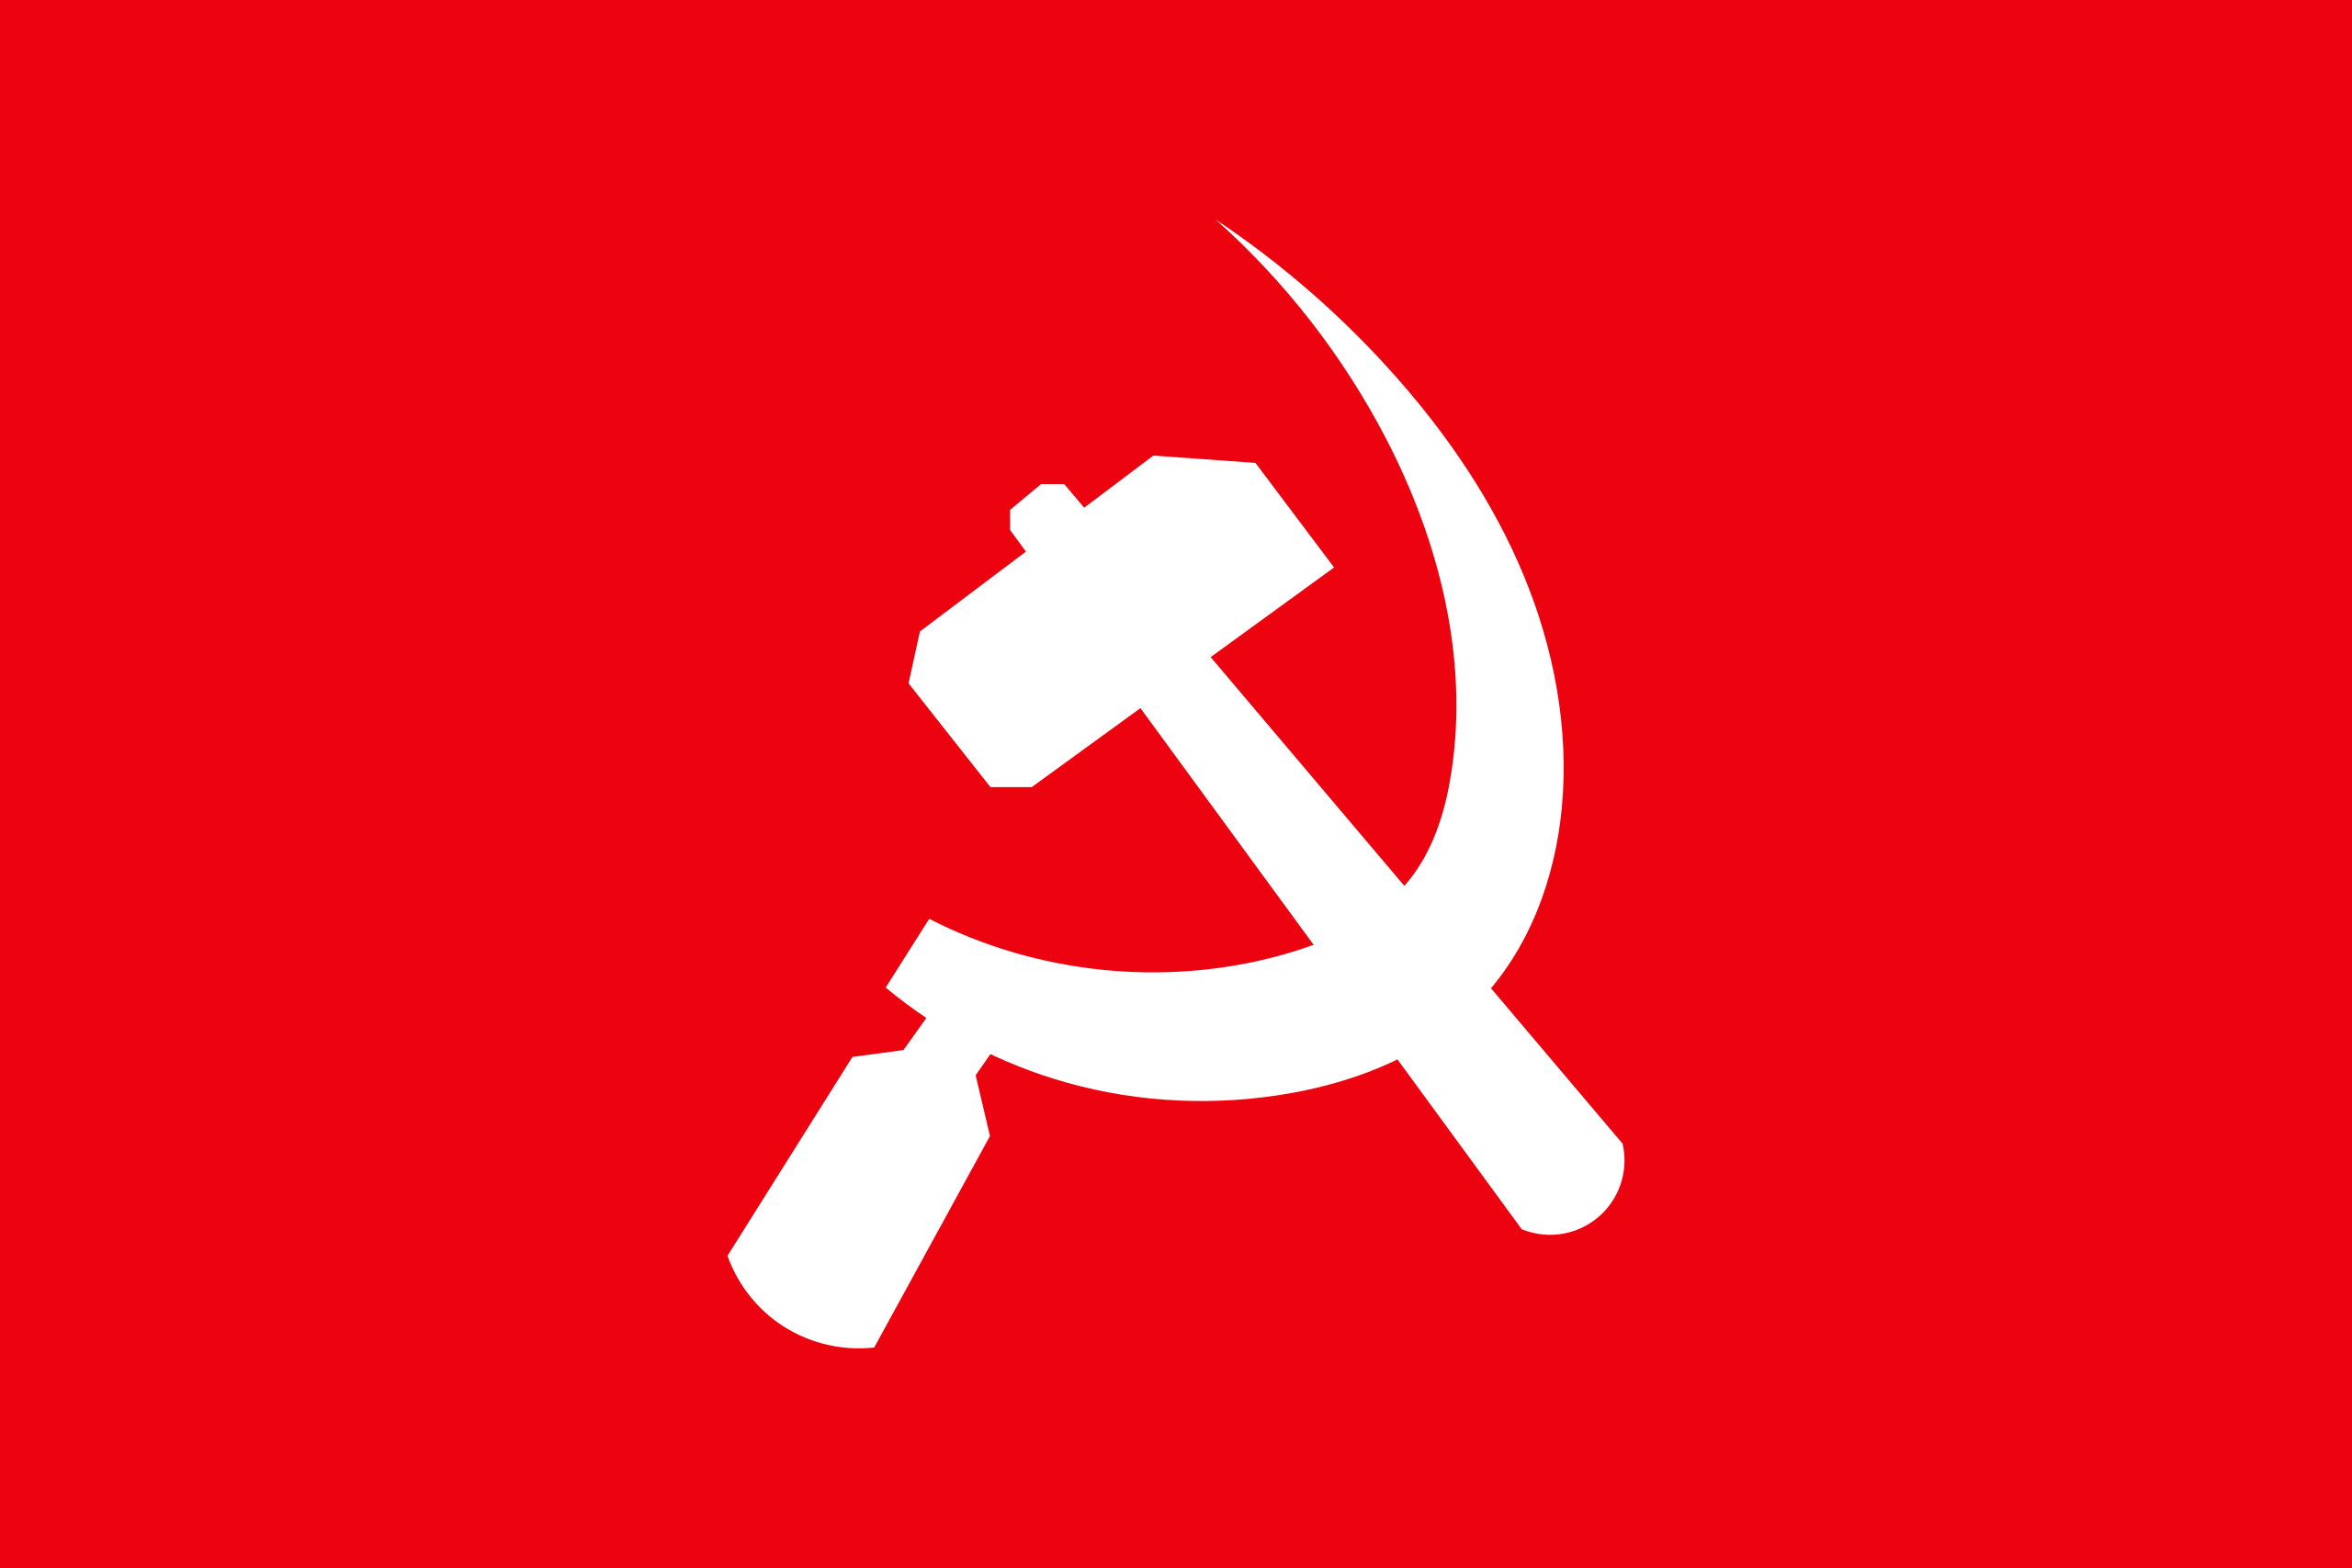 File:CPI Maoist flag.png